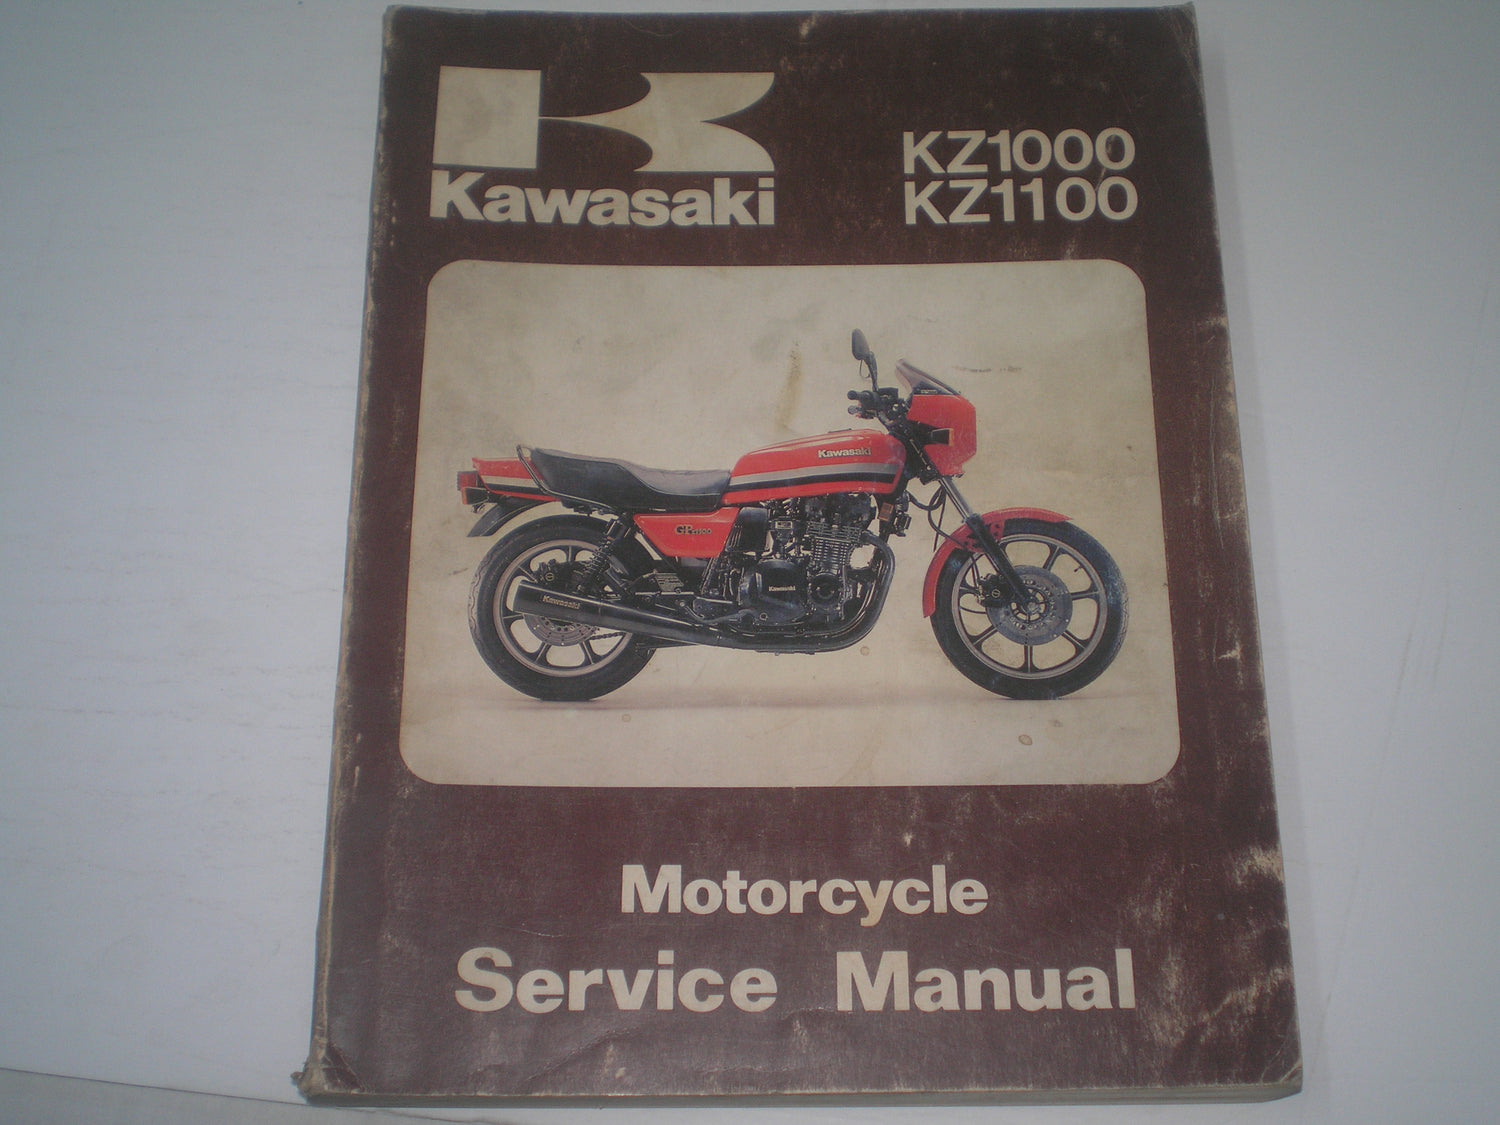 Kawasaki Literature - Service Manual / Parts Catalogue / Owner's Manual / Book / Technical Data / Bulletin